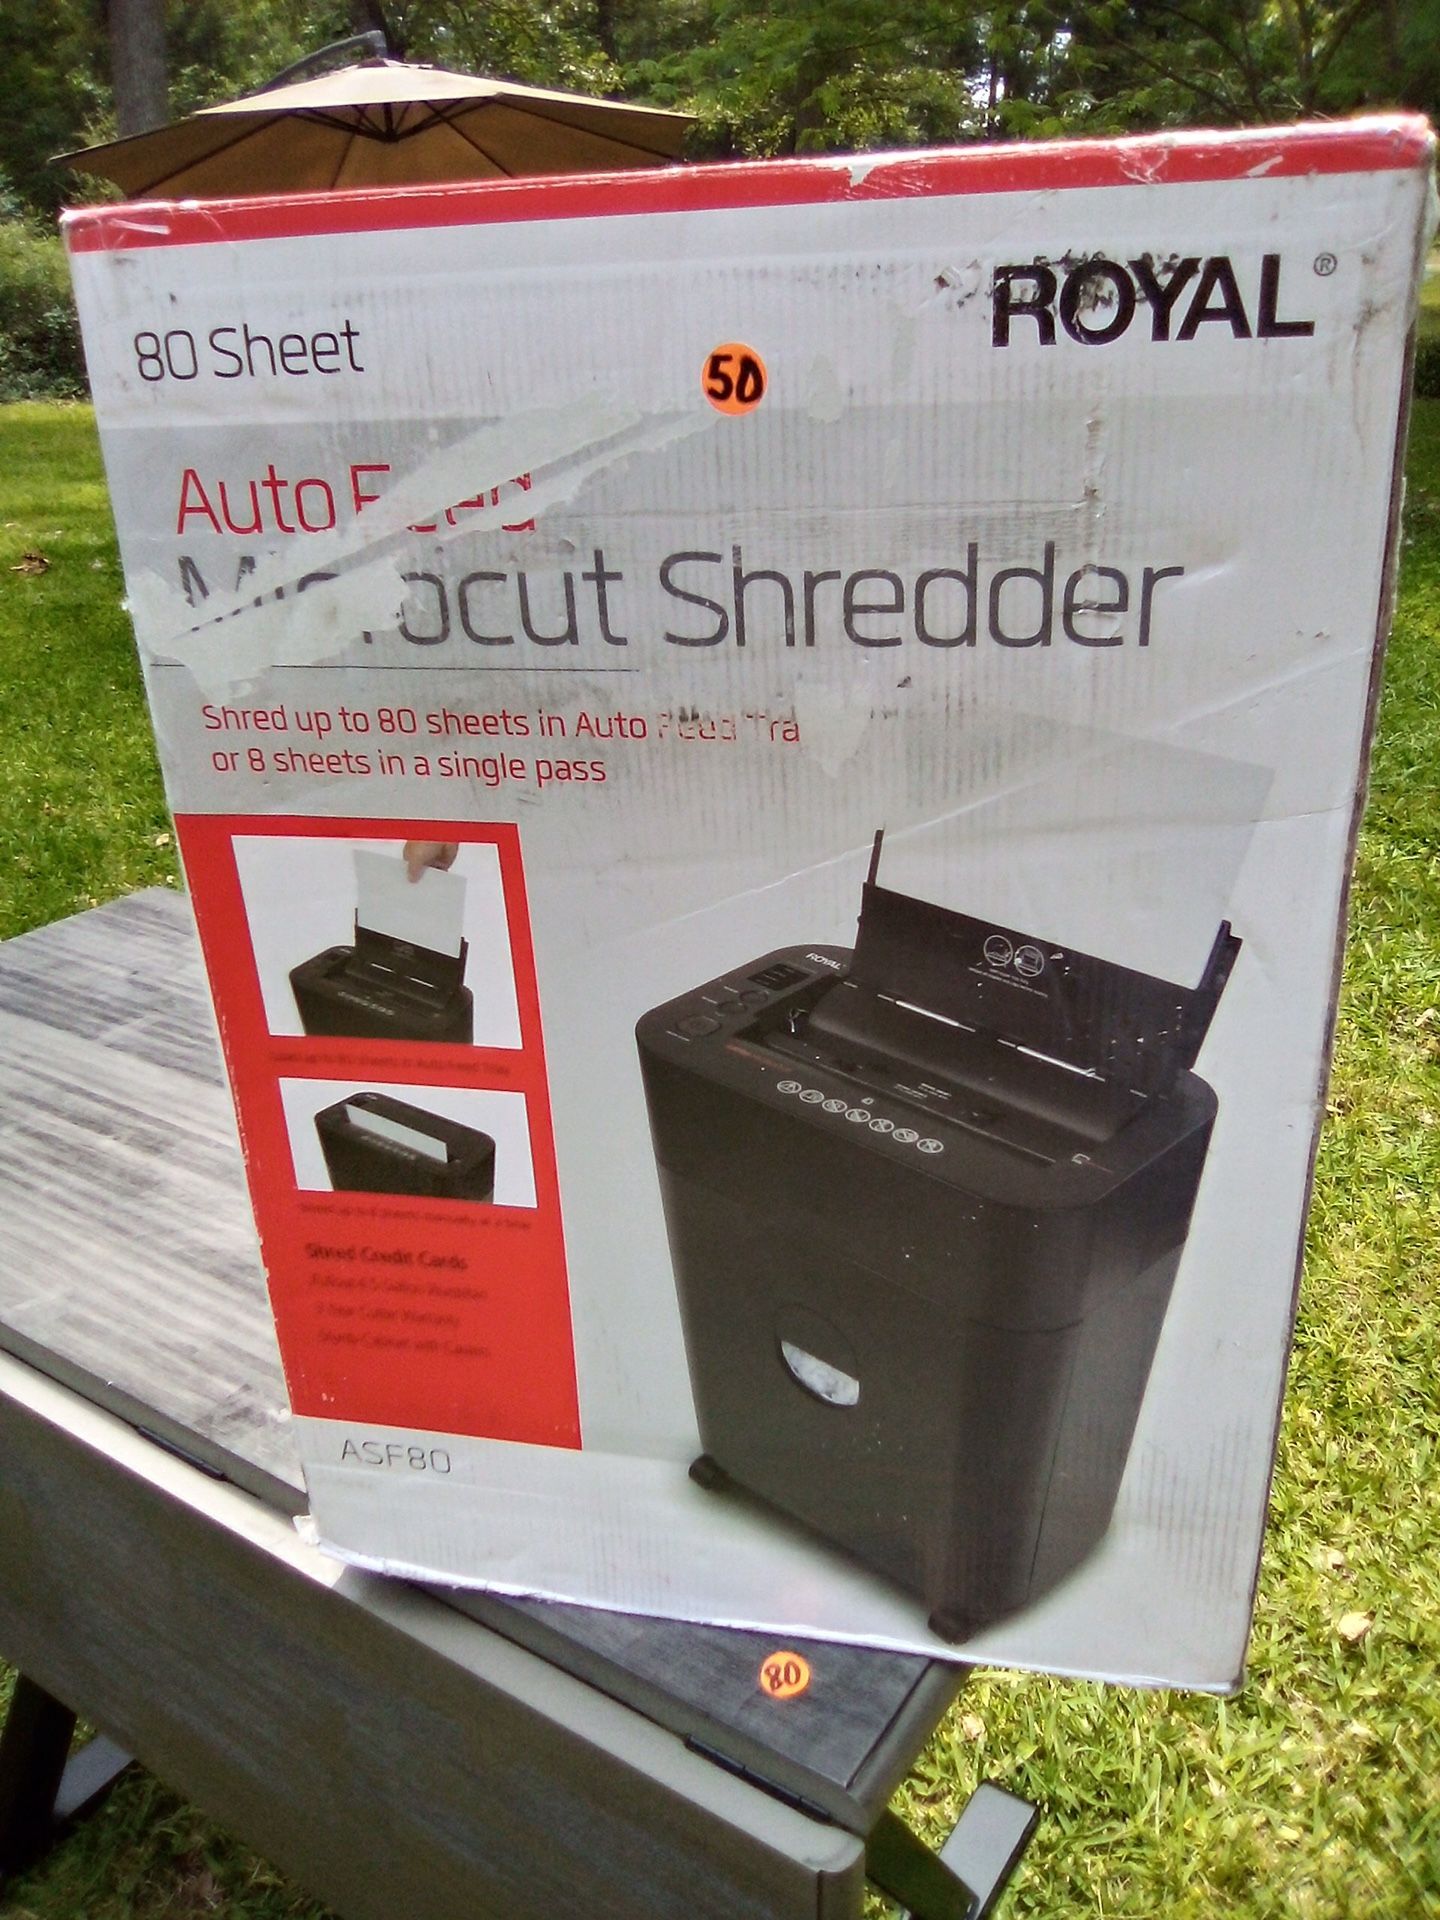 Auto feed paper shredder